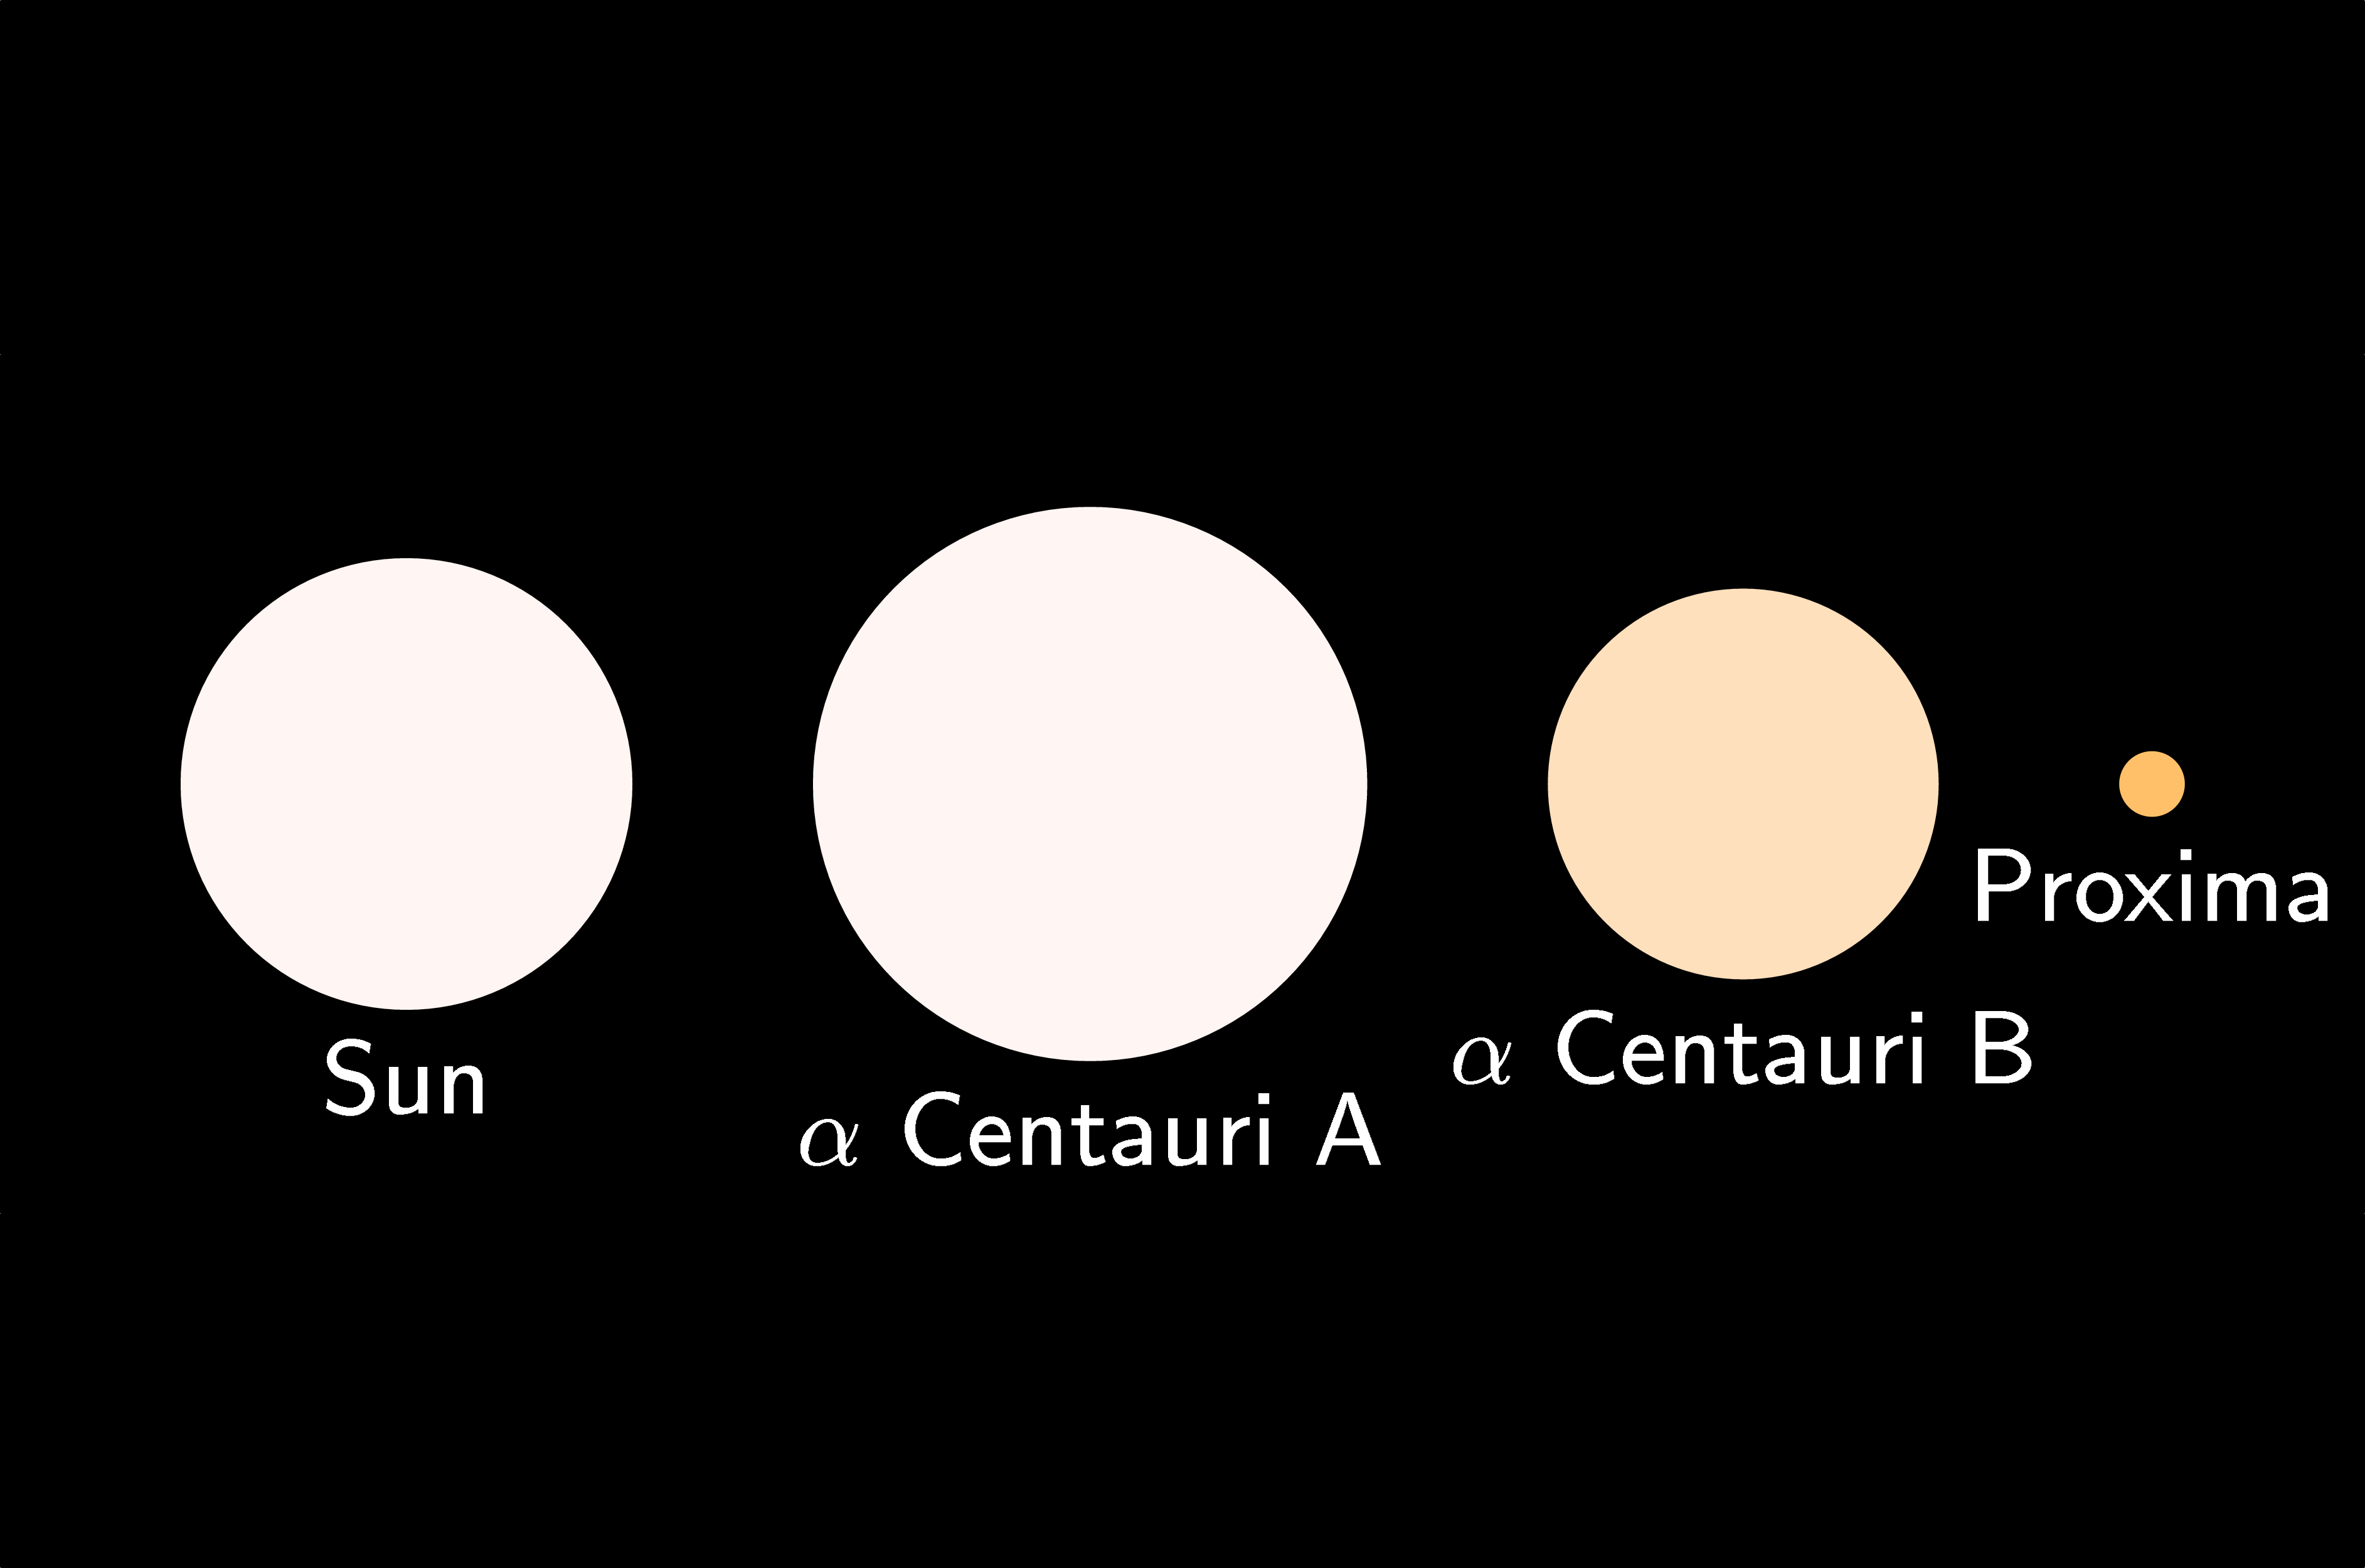 Nearest star. Система звезд Альфа Центавра. Альфа Центавра карта системы. Звёздная система Альфа Центавра схема. Система Проксима Центавра.